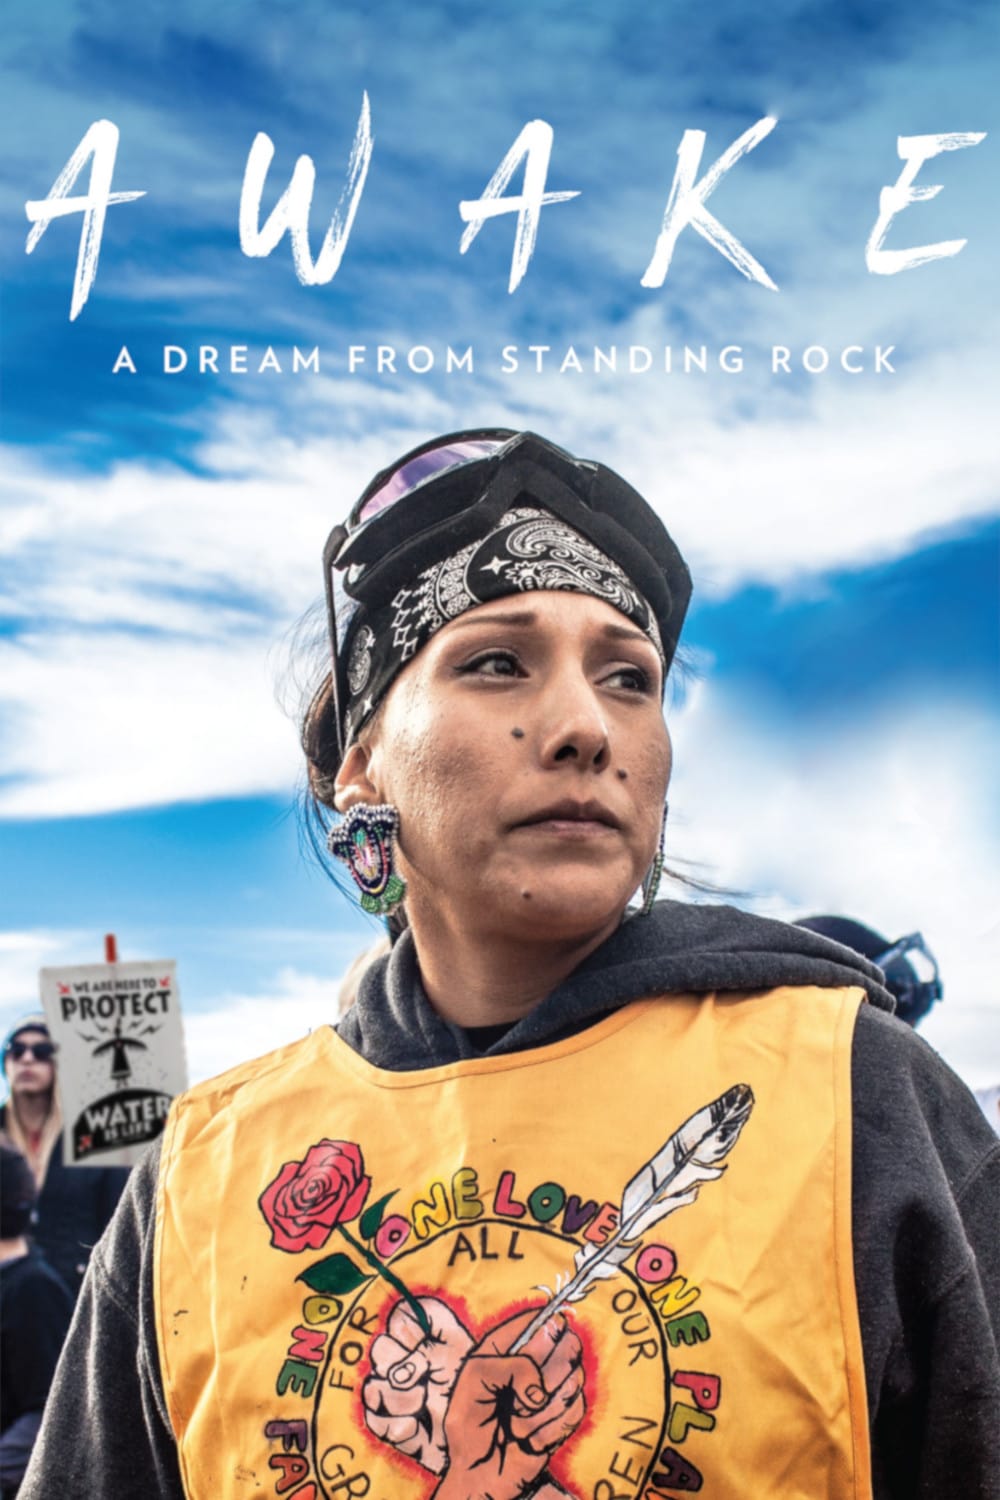 Caratula de AWAKE, A Dream from Standing Rock (AWAKE, A Dream from Standing Rock) 